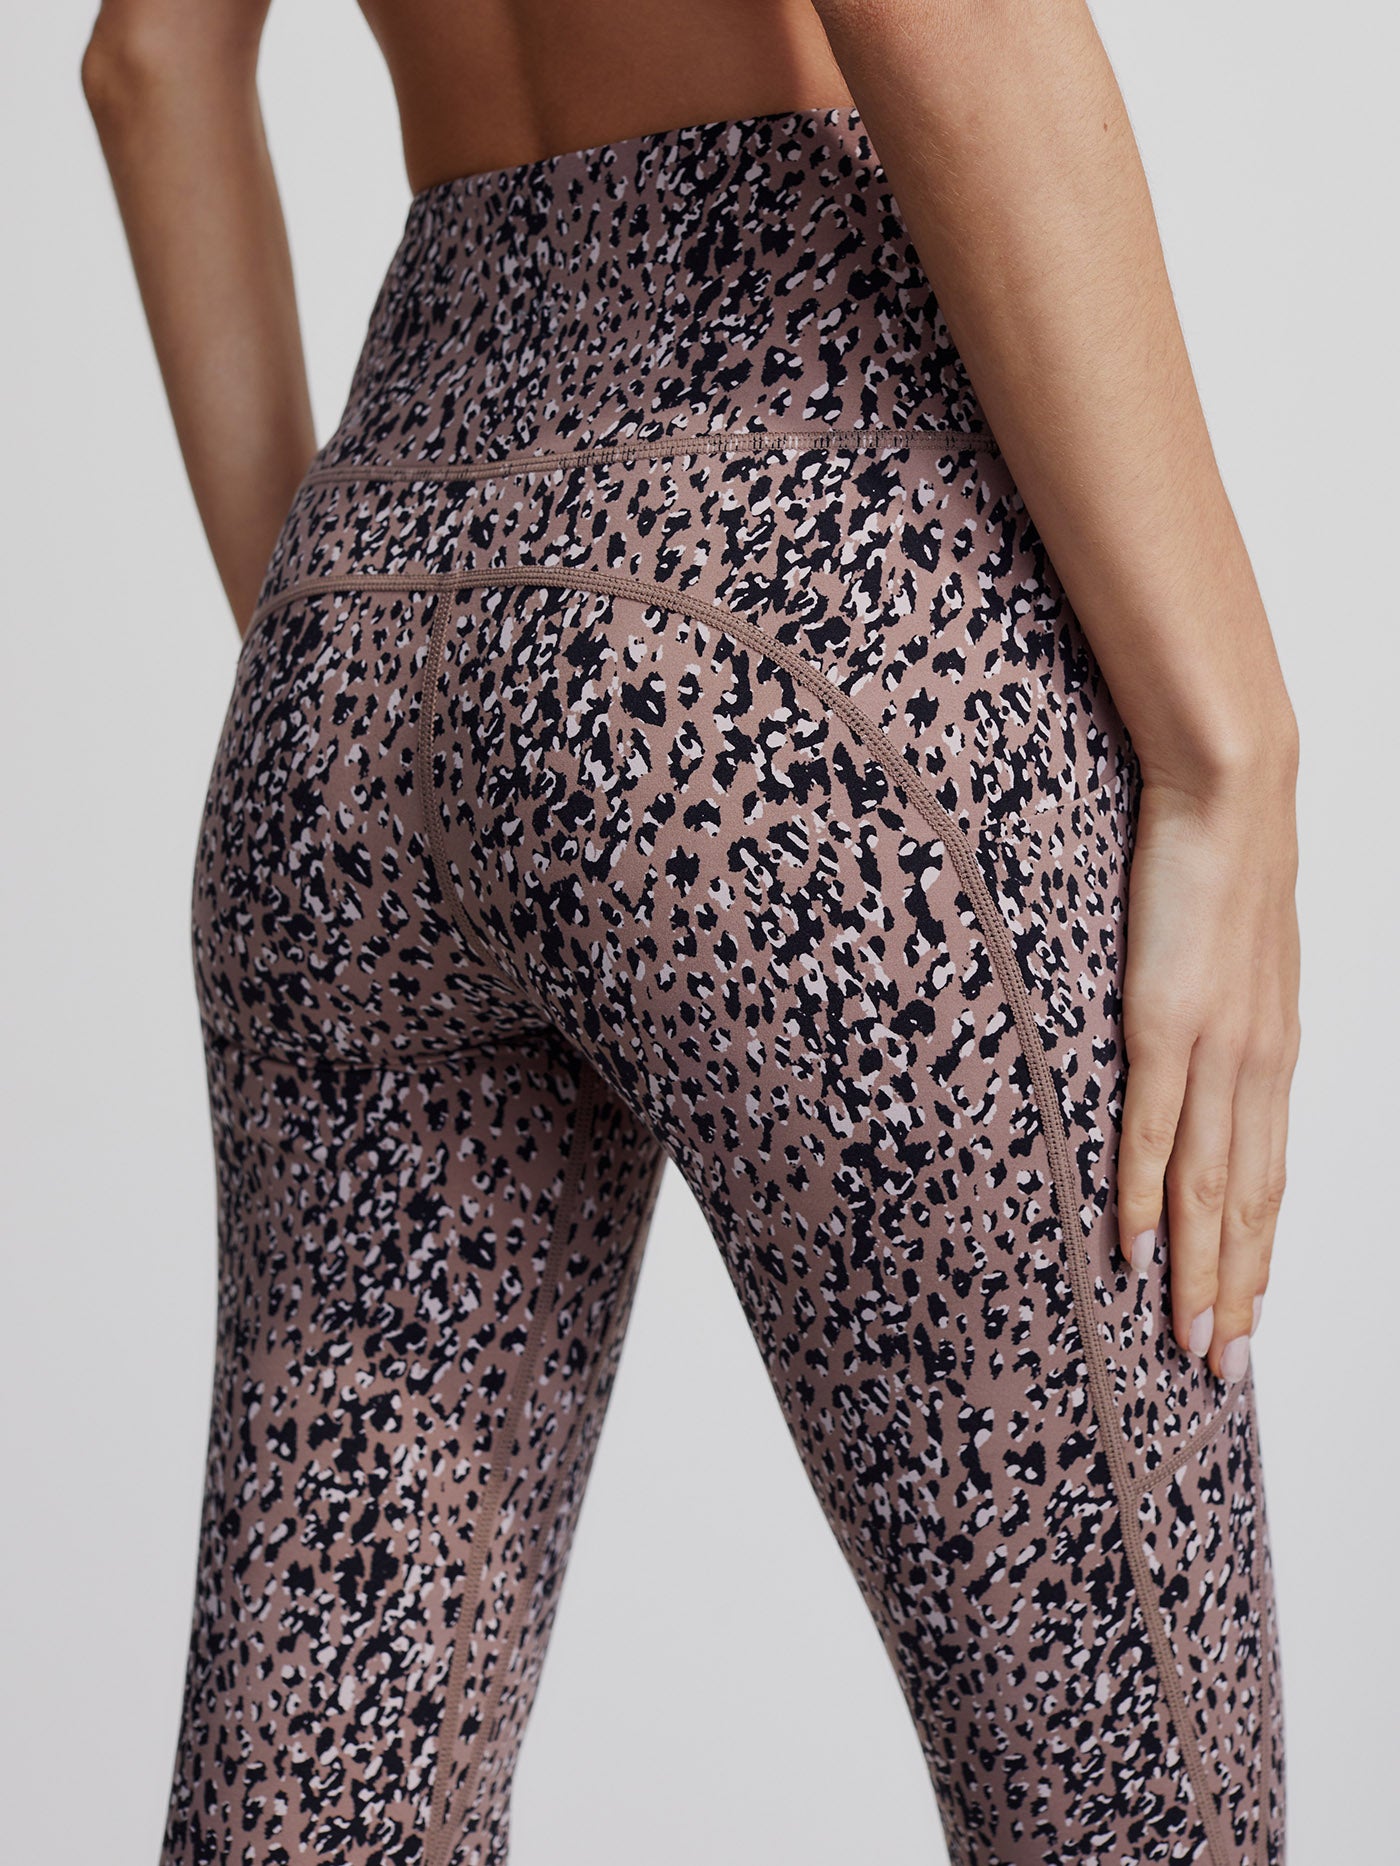 Varley Luna Leggings Women's Size Medium Brown Black Leopard Print